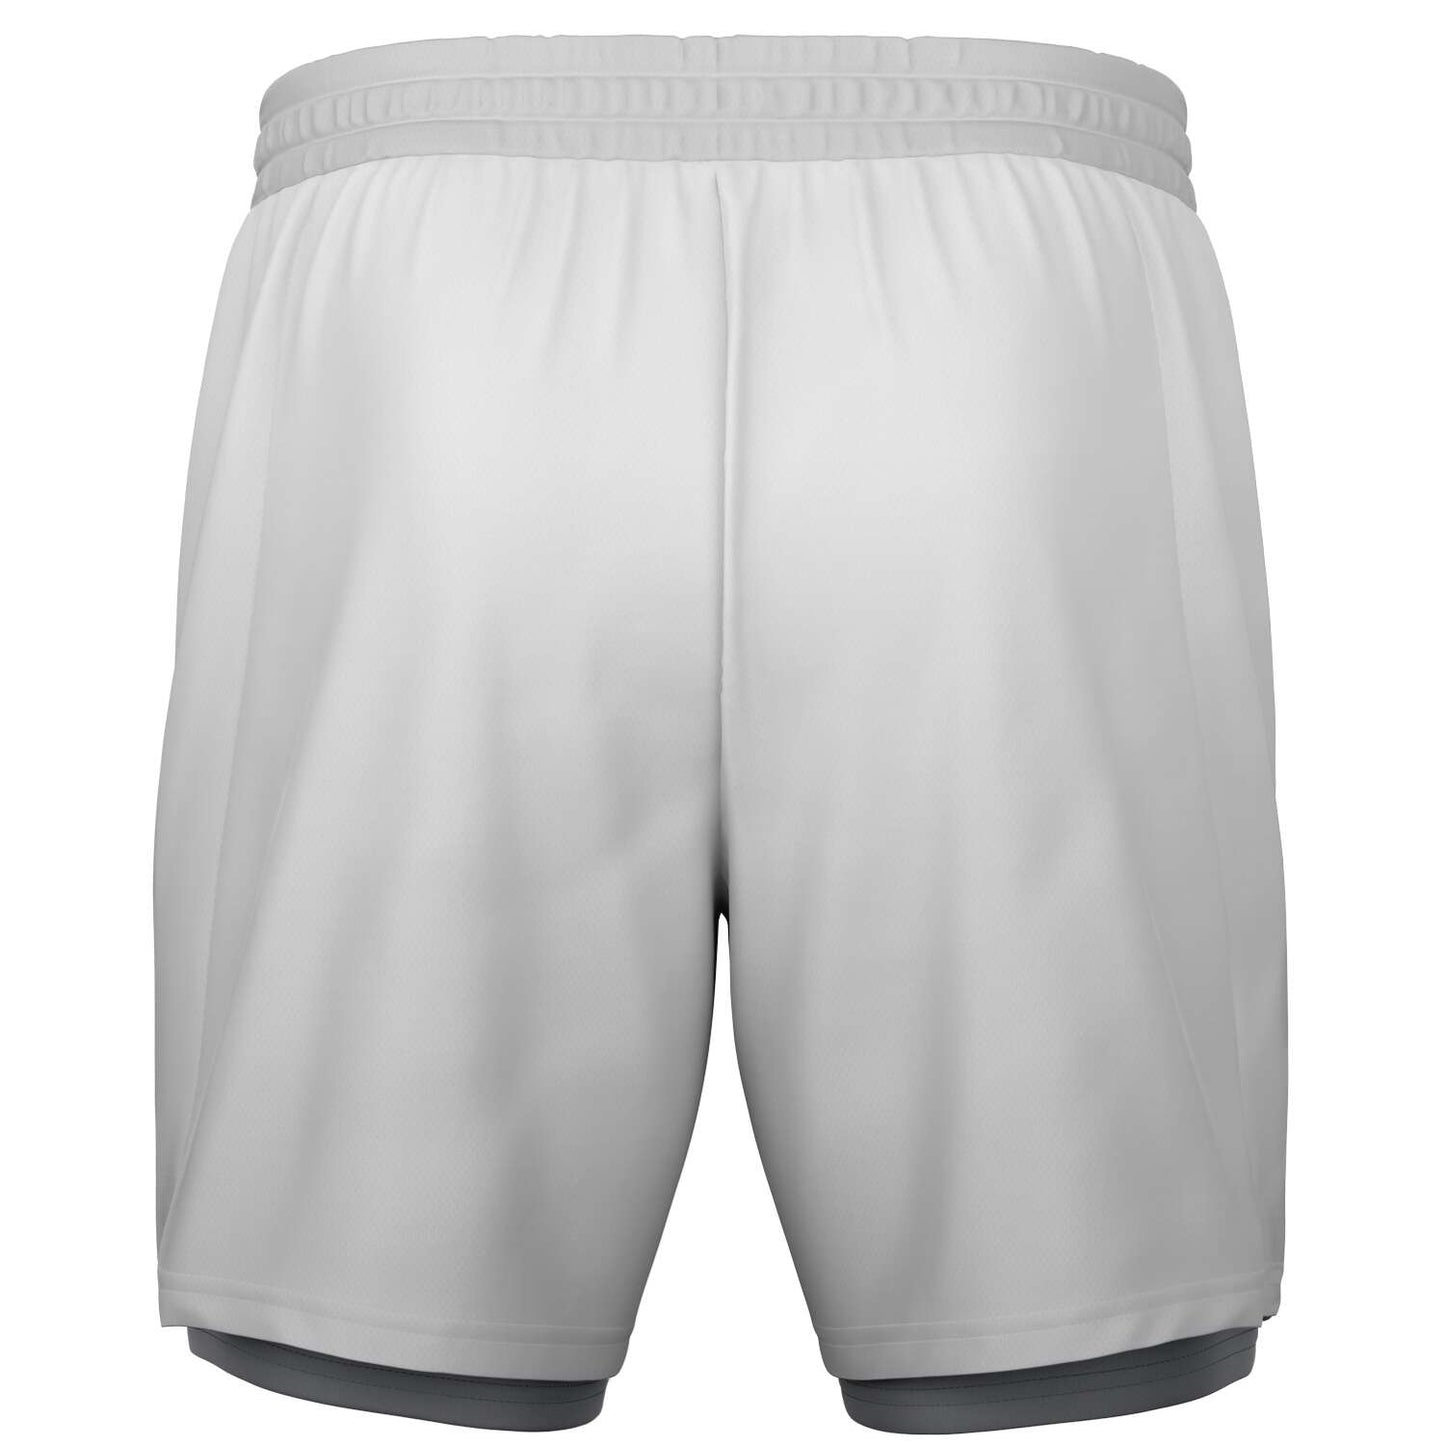 Duntalk "Doodle" Men's 2-in-1 Shorts - Grey